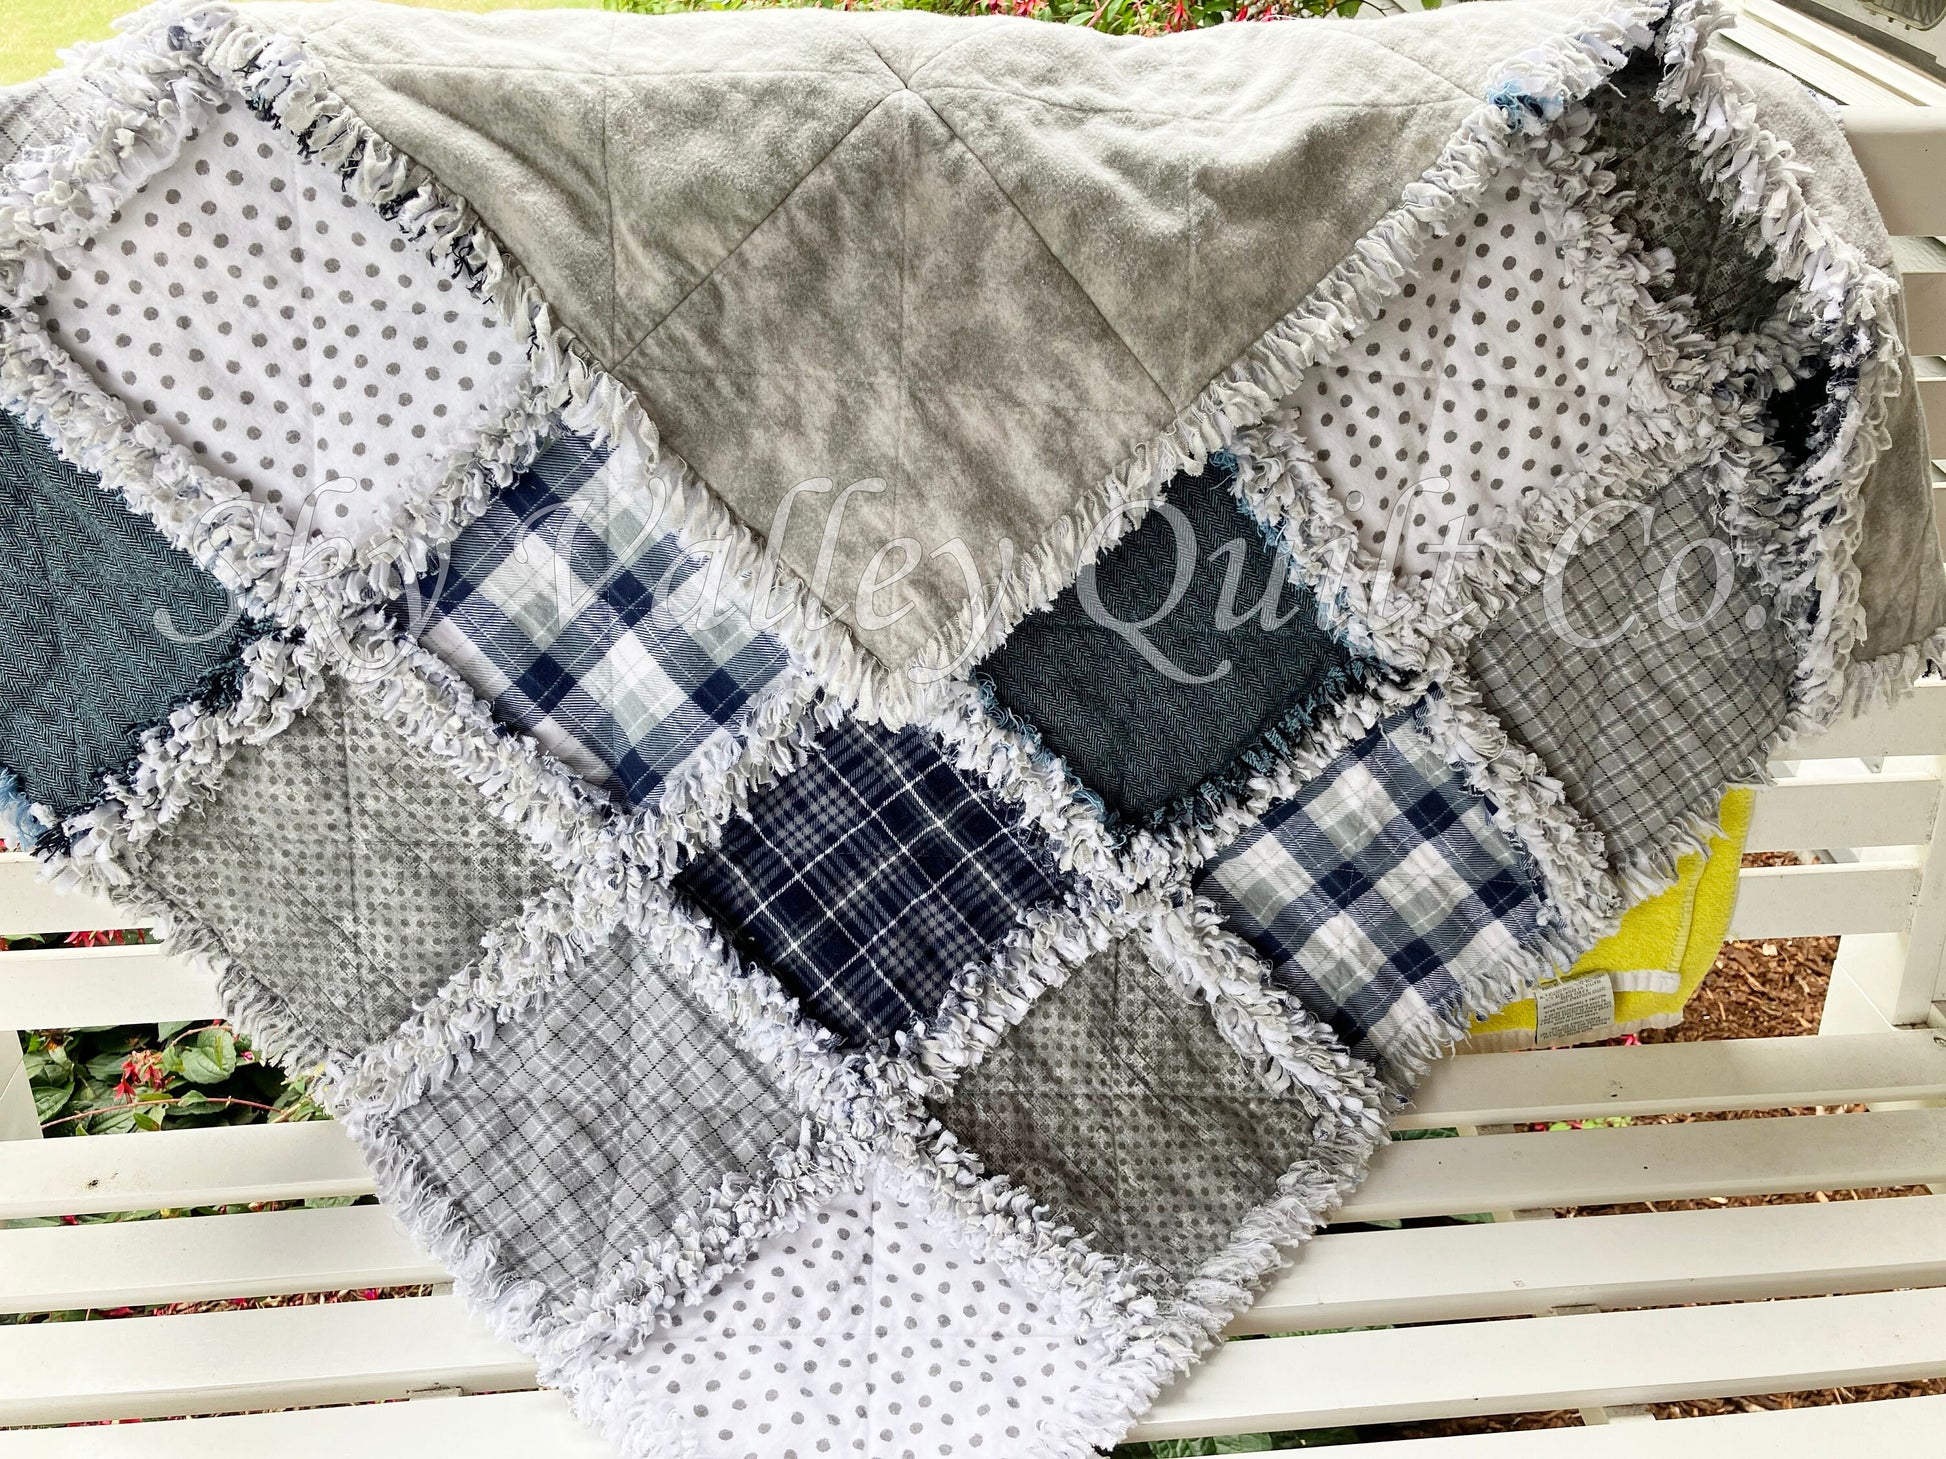 Precut rag quilt KIT ~ navy blue and gray flannels - restocked!